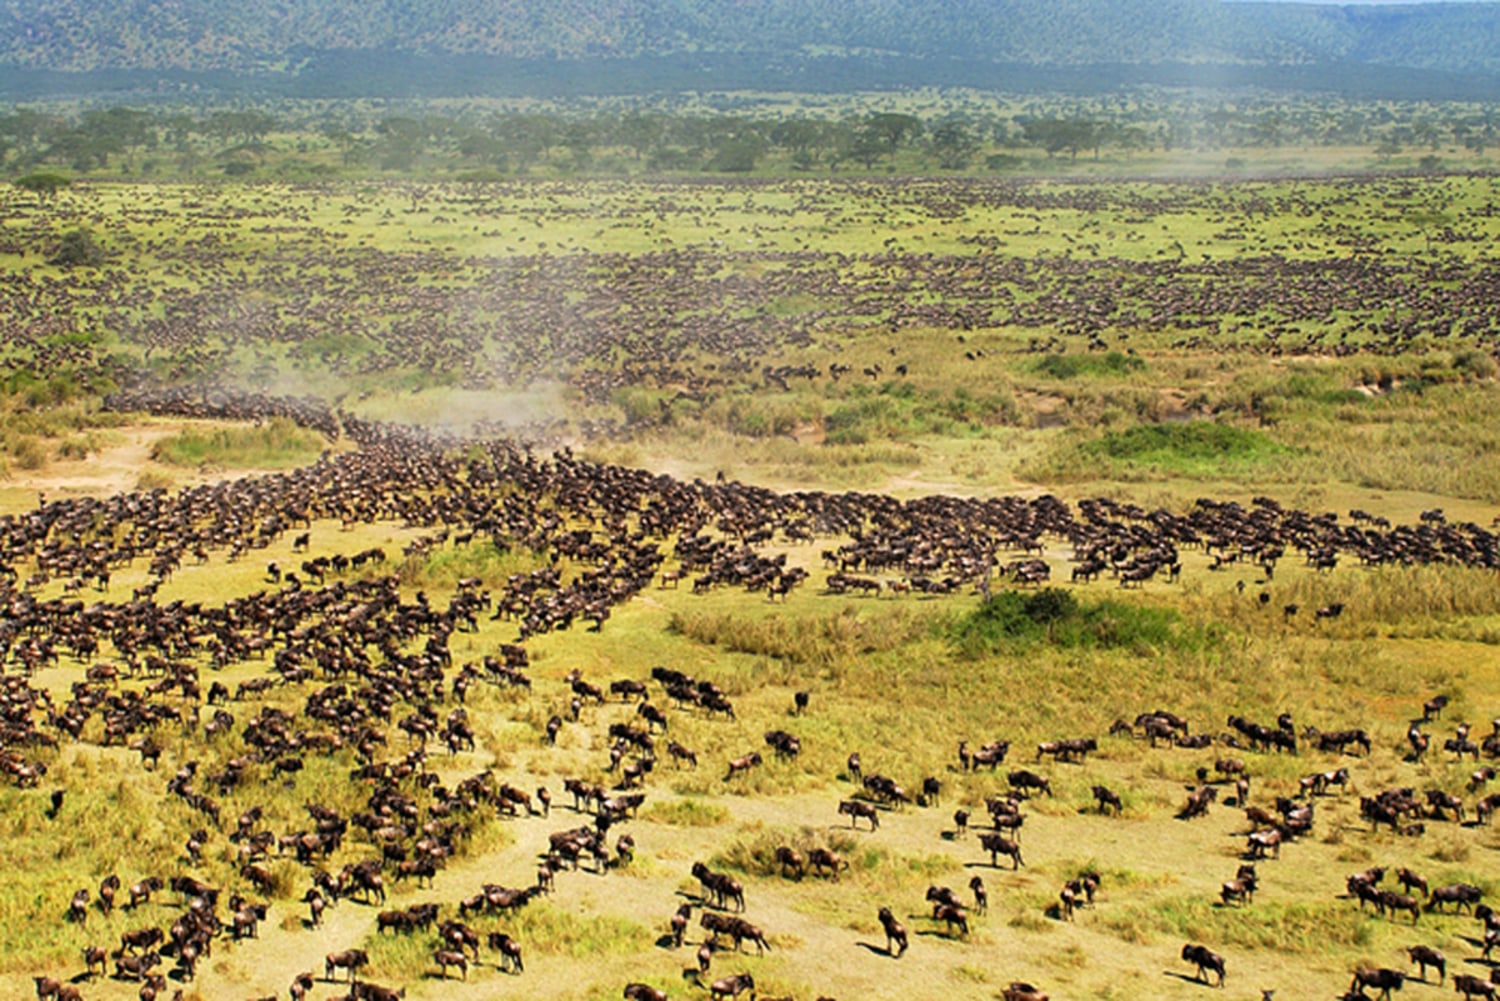 Road through Serengeti could threaten epic migration